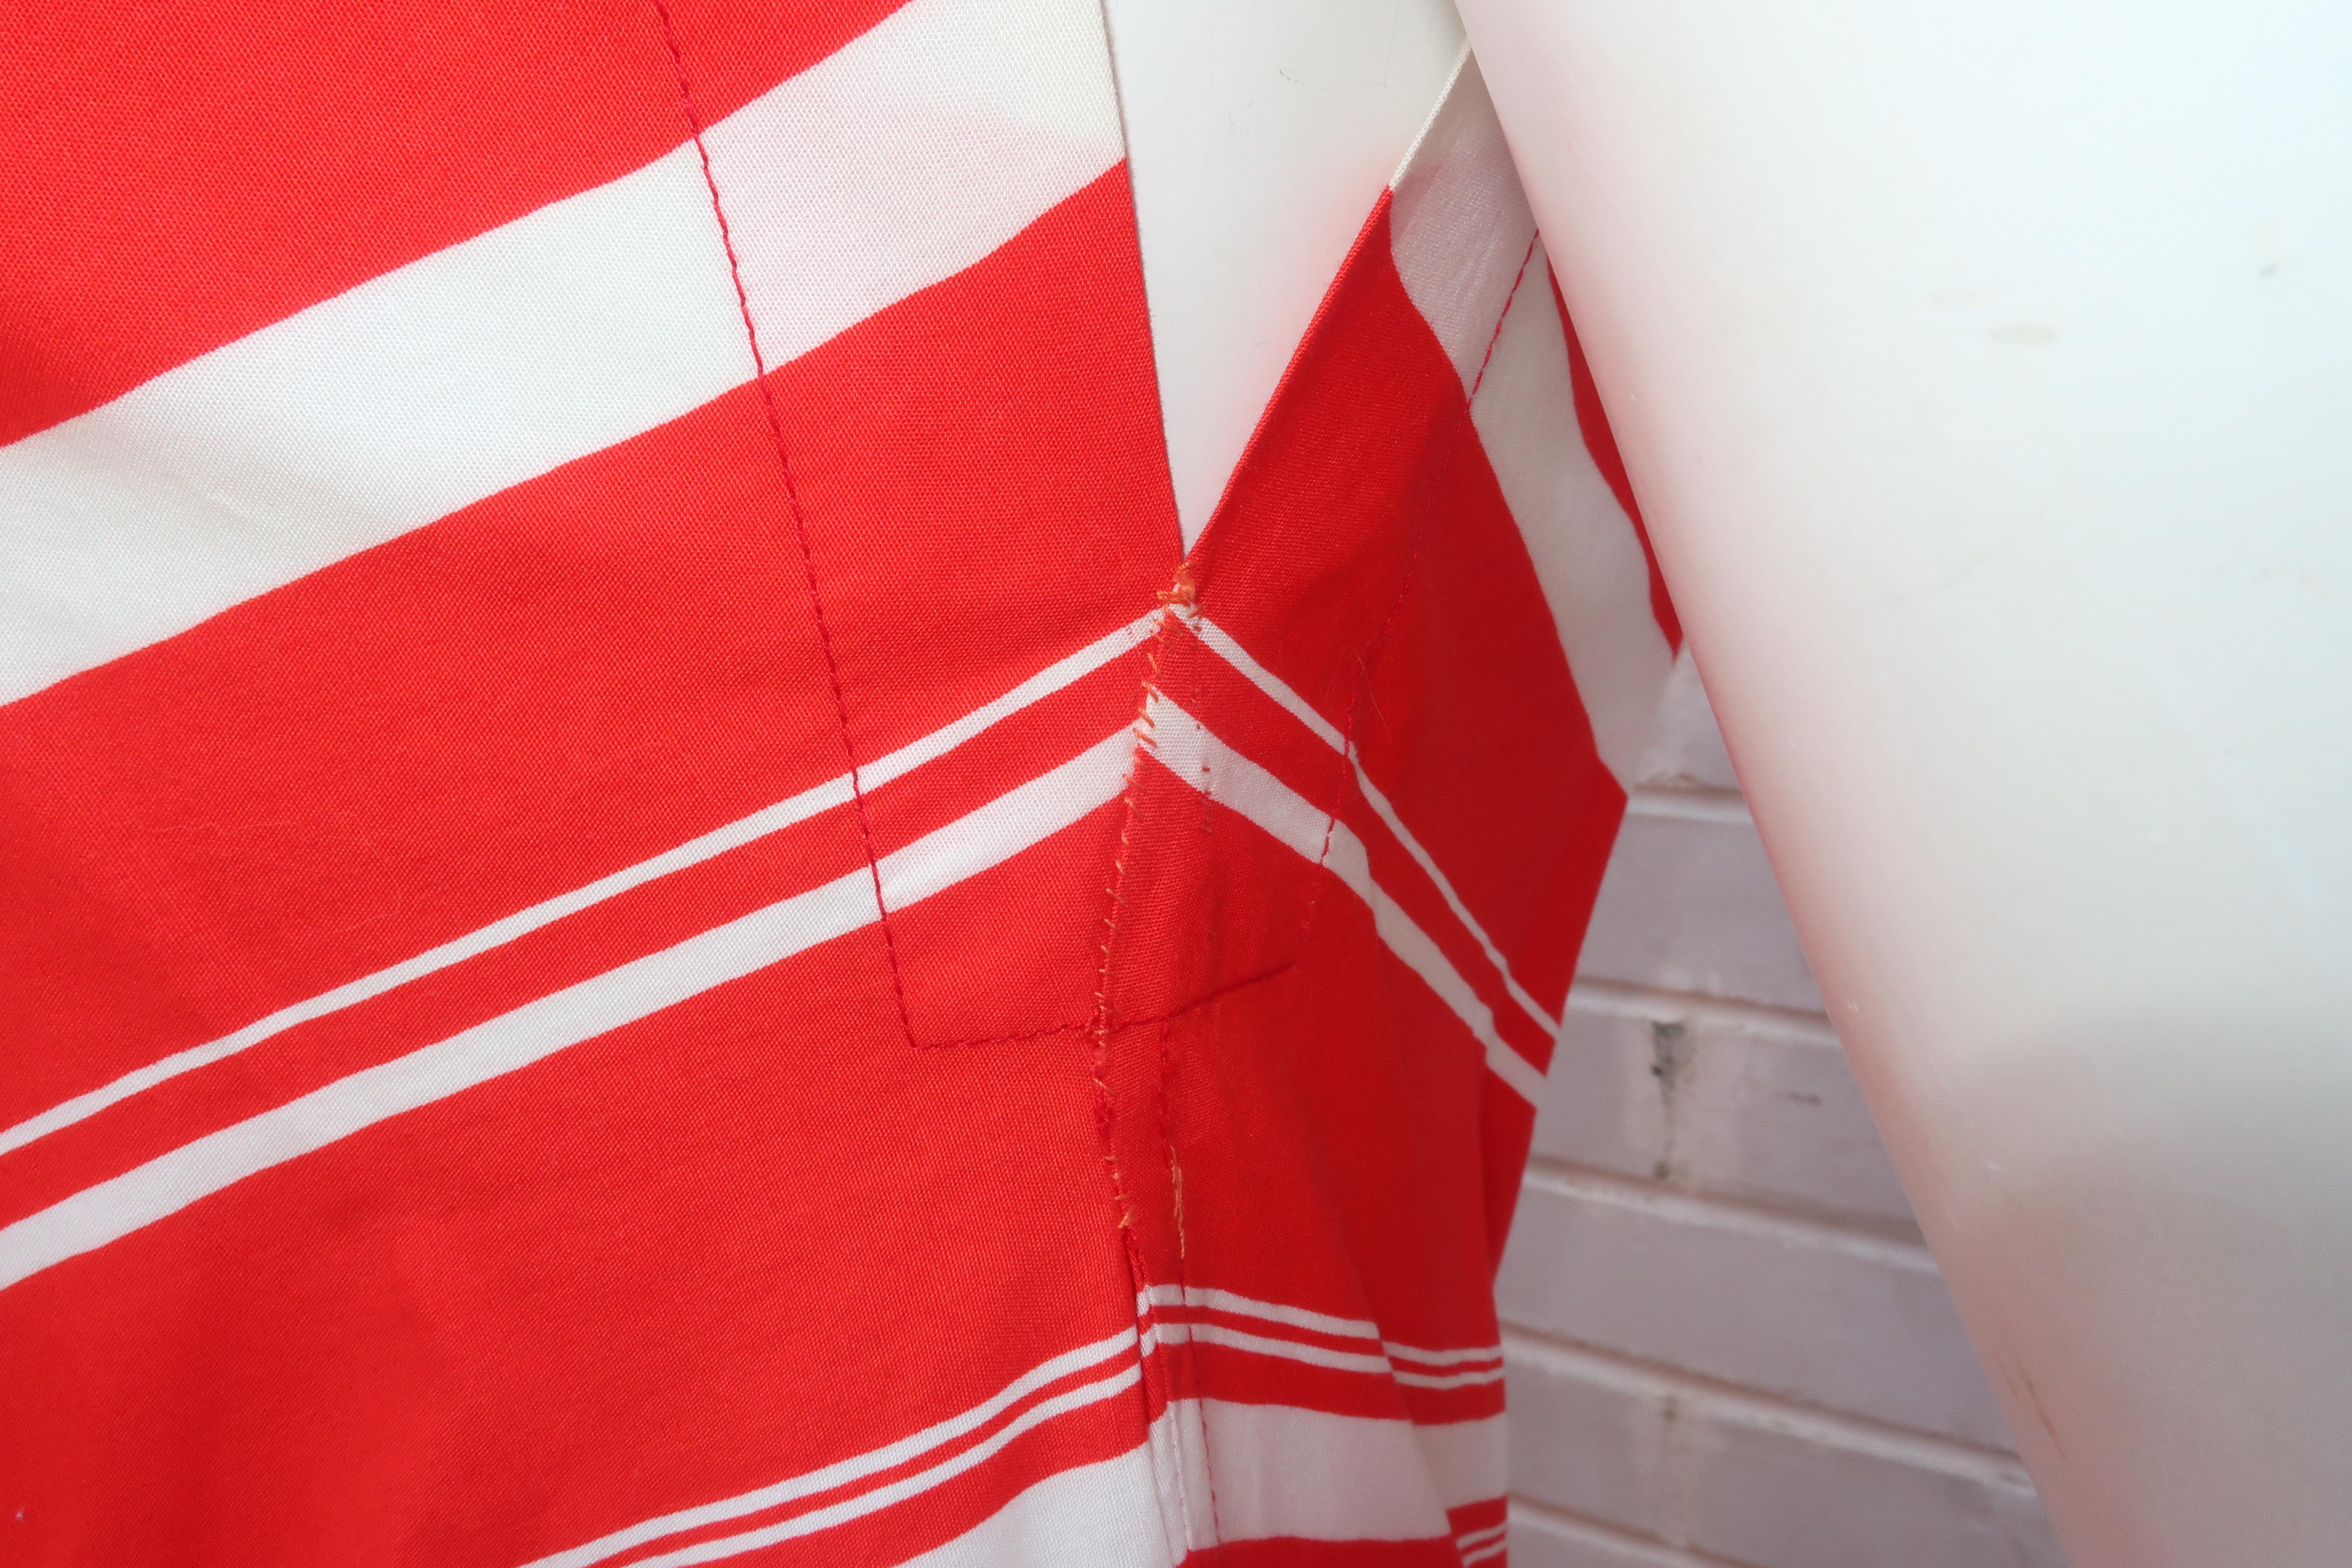 Yves Saint Laurent 1970’s Red & White Candy Stripe Dress 2